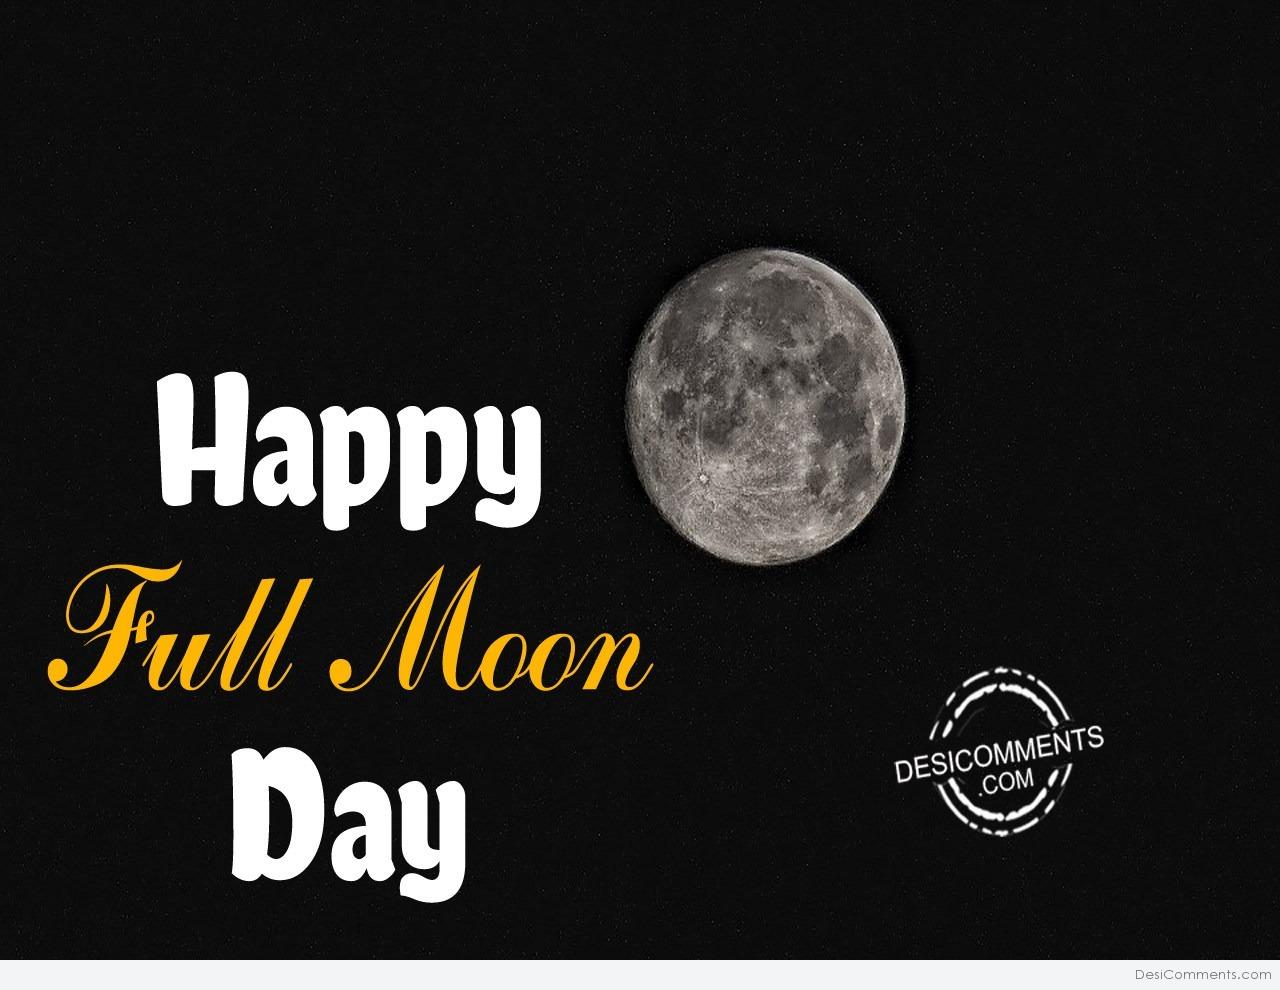 Moon Day. Happy Full. Monday Moon Day. Moon даты